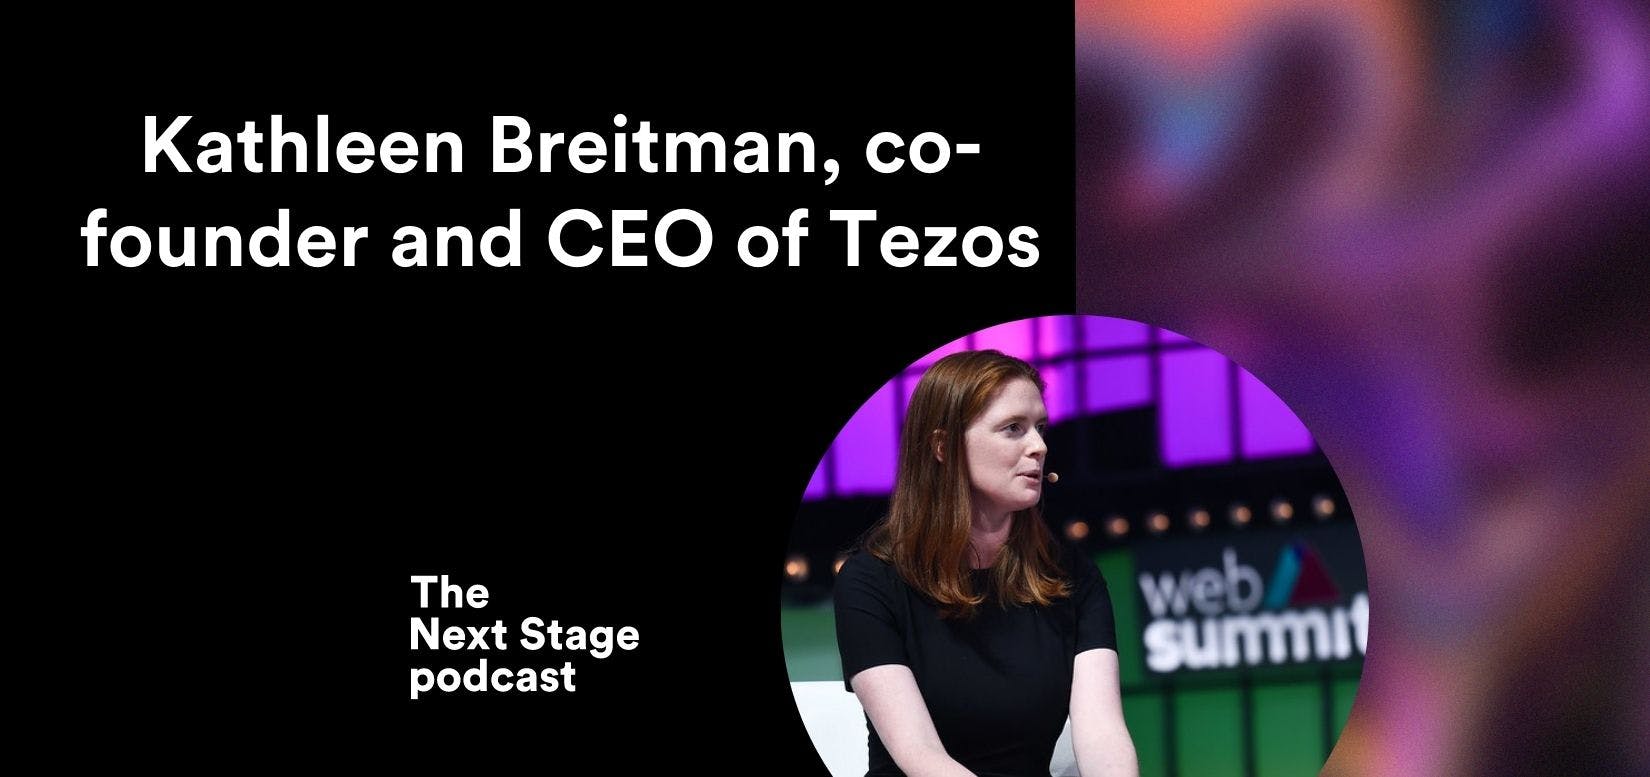 Kathleen Breitman, co-founder and CEO of Tezos at Web Summit 2021